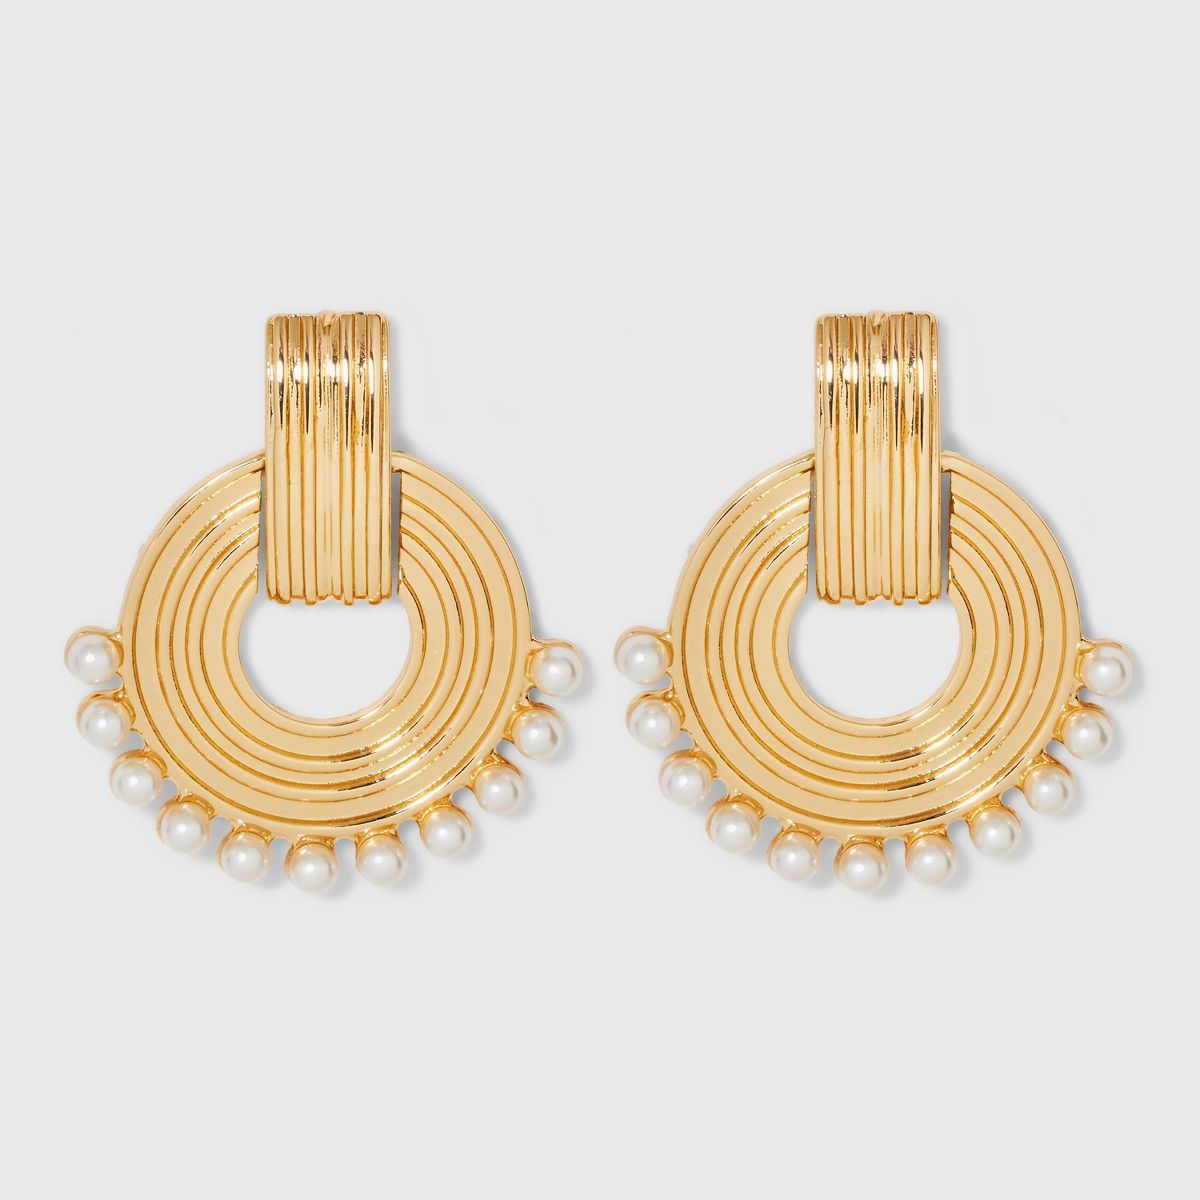 SUGARFIX by BaubleBar Gold and Pearl Interlocking Earrings | Target